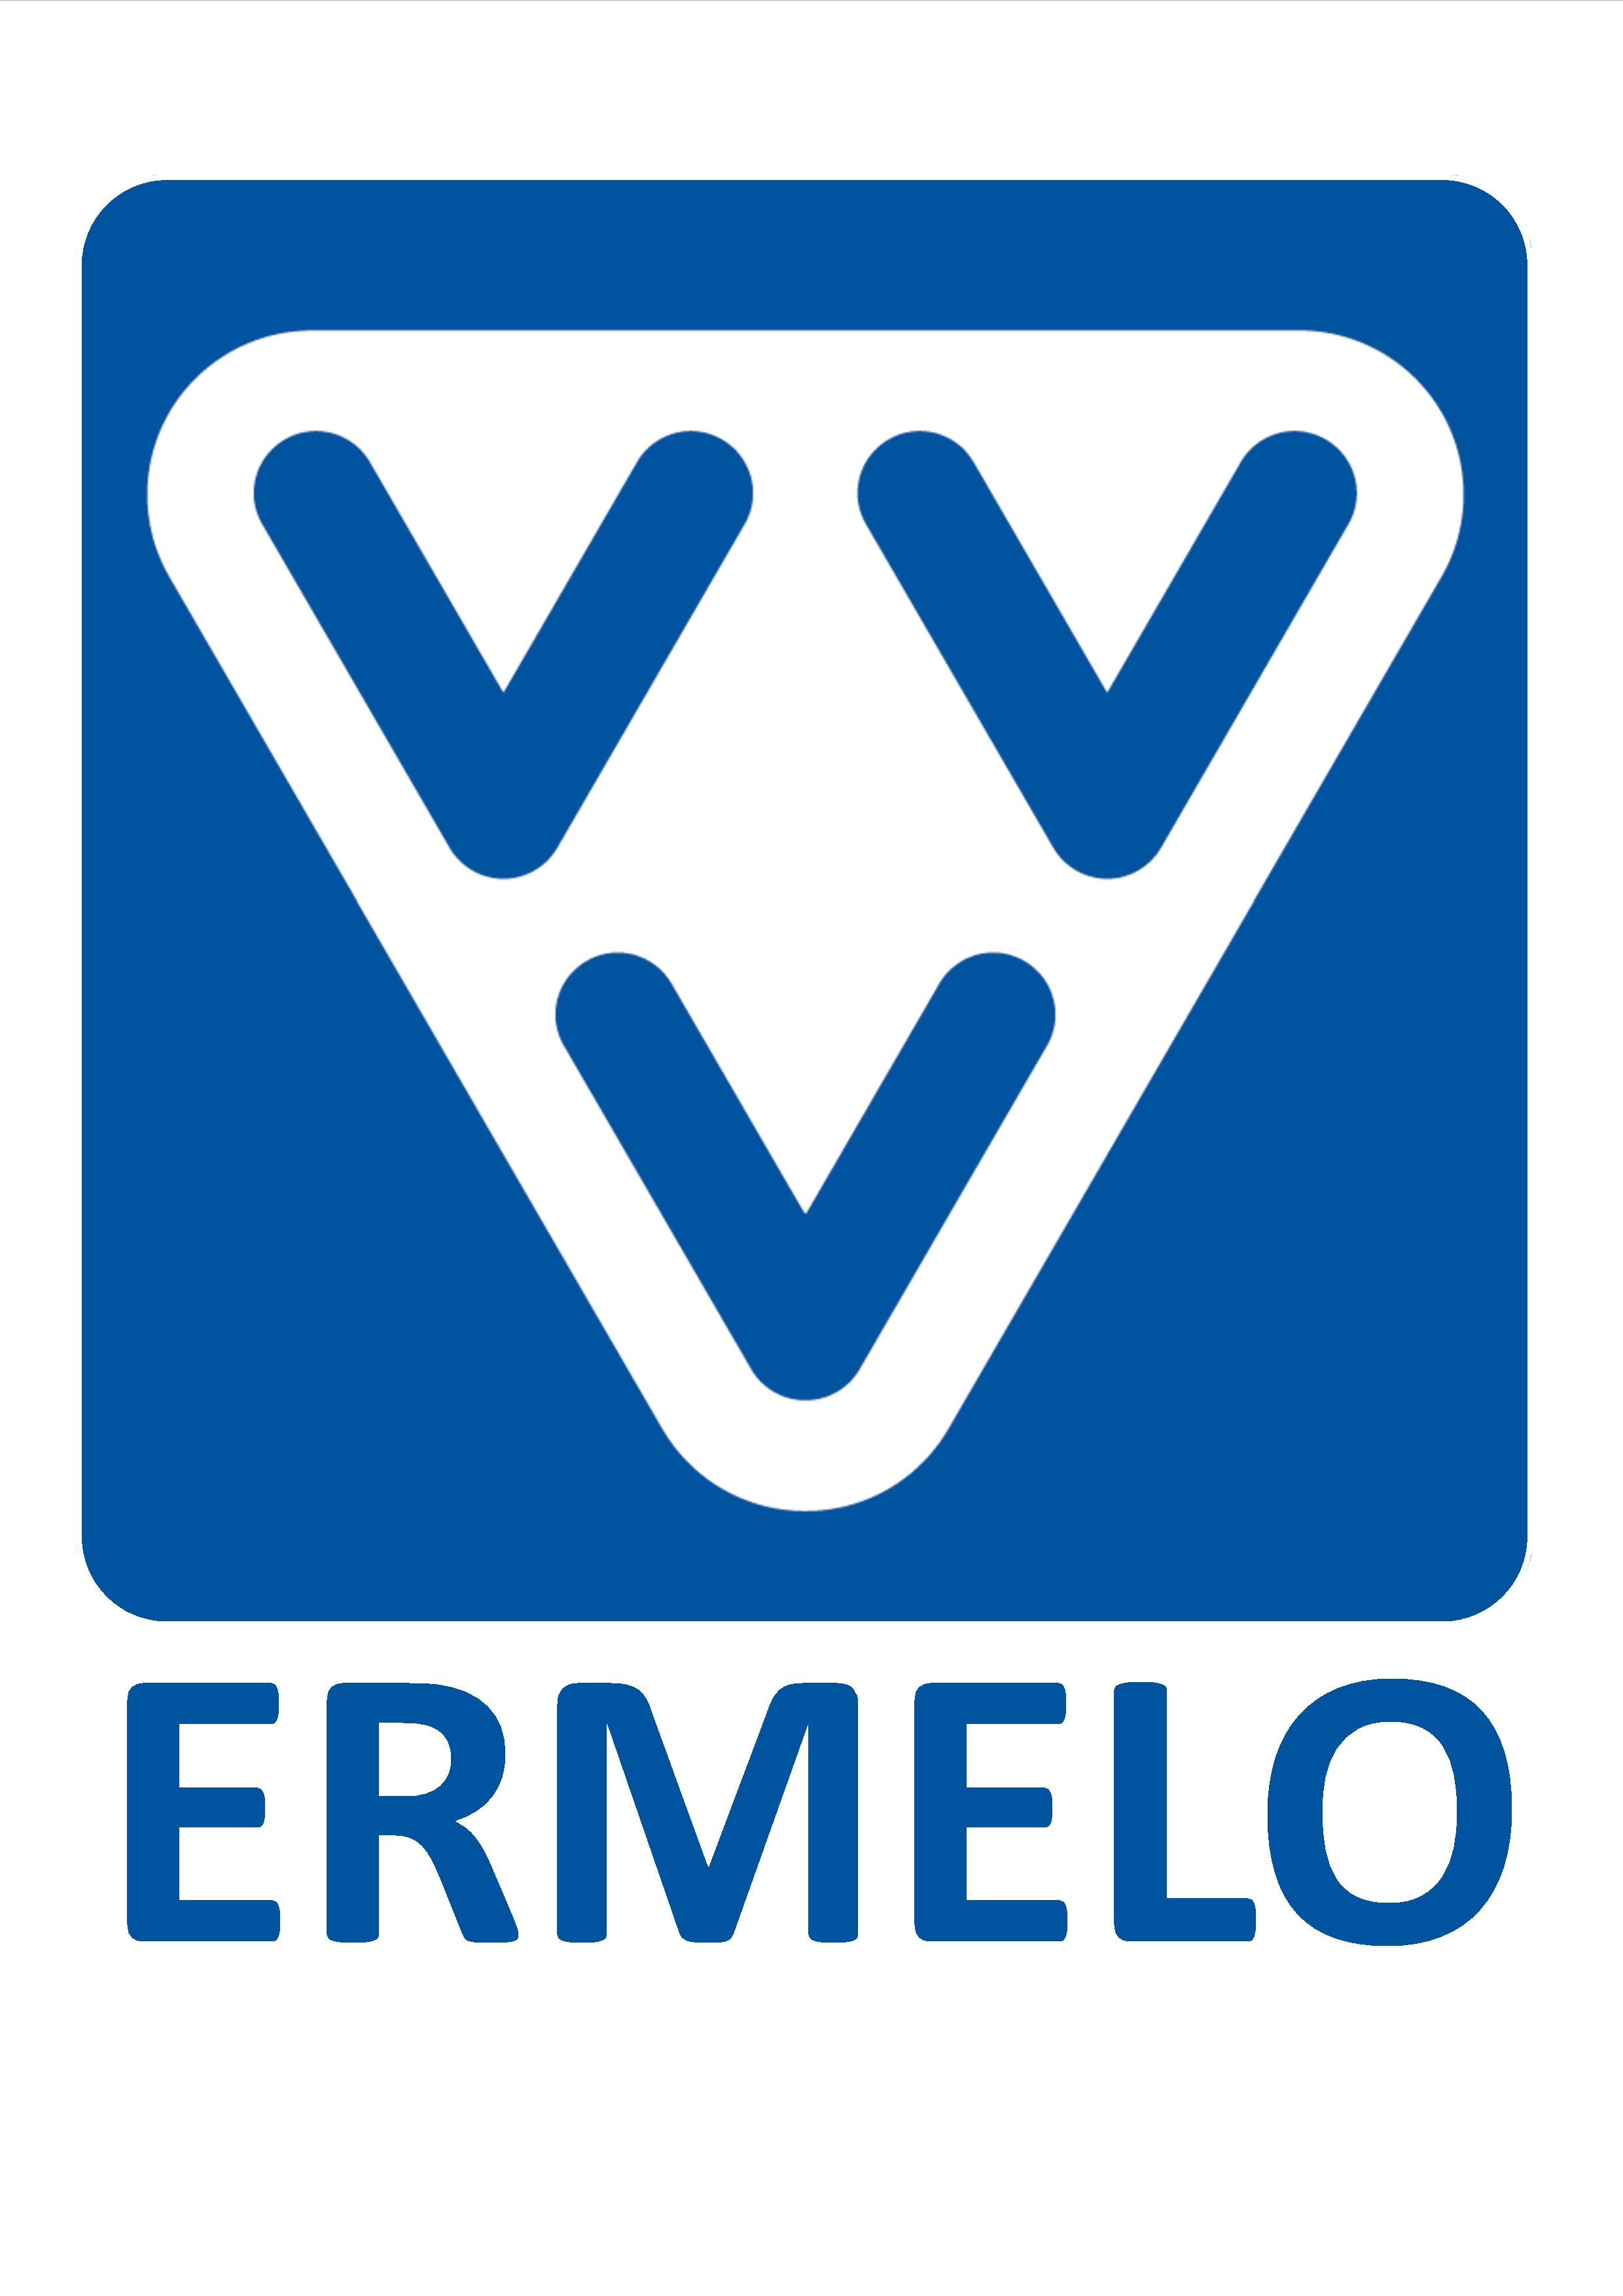 VVV Ermelo